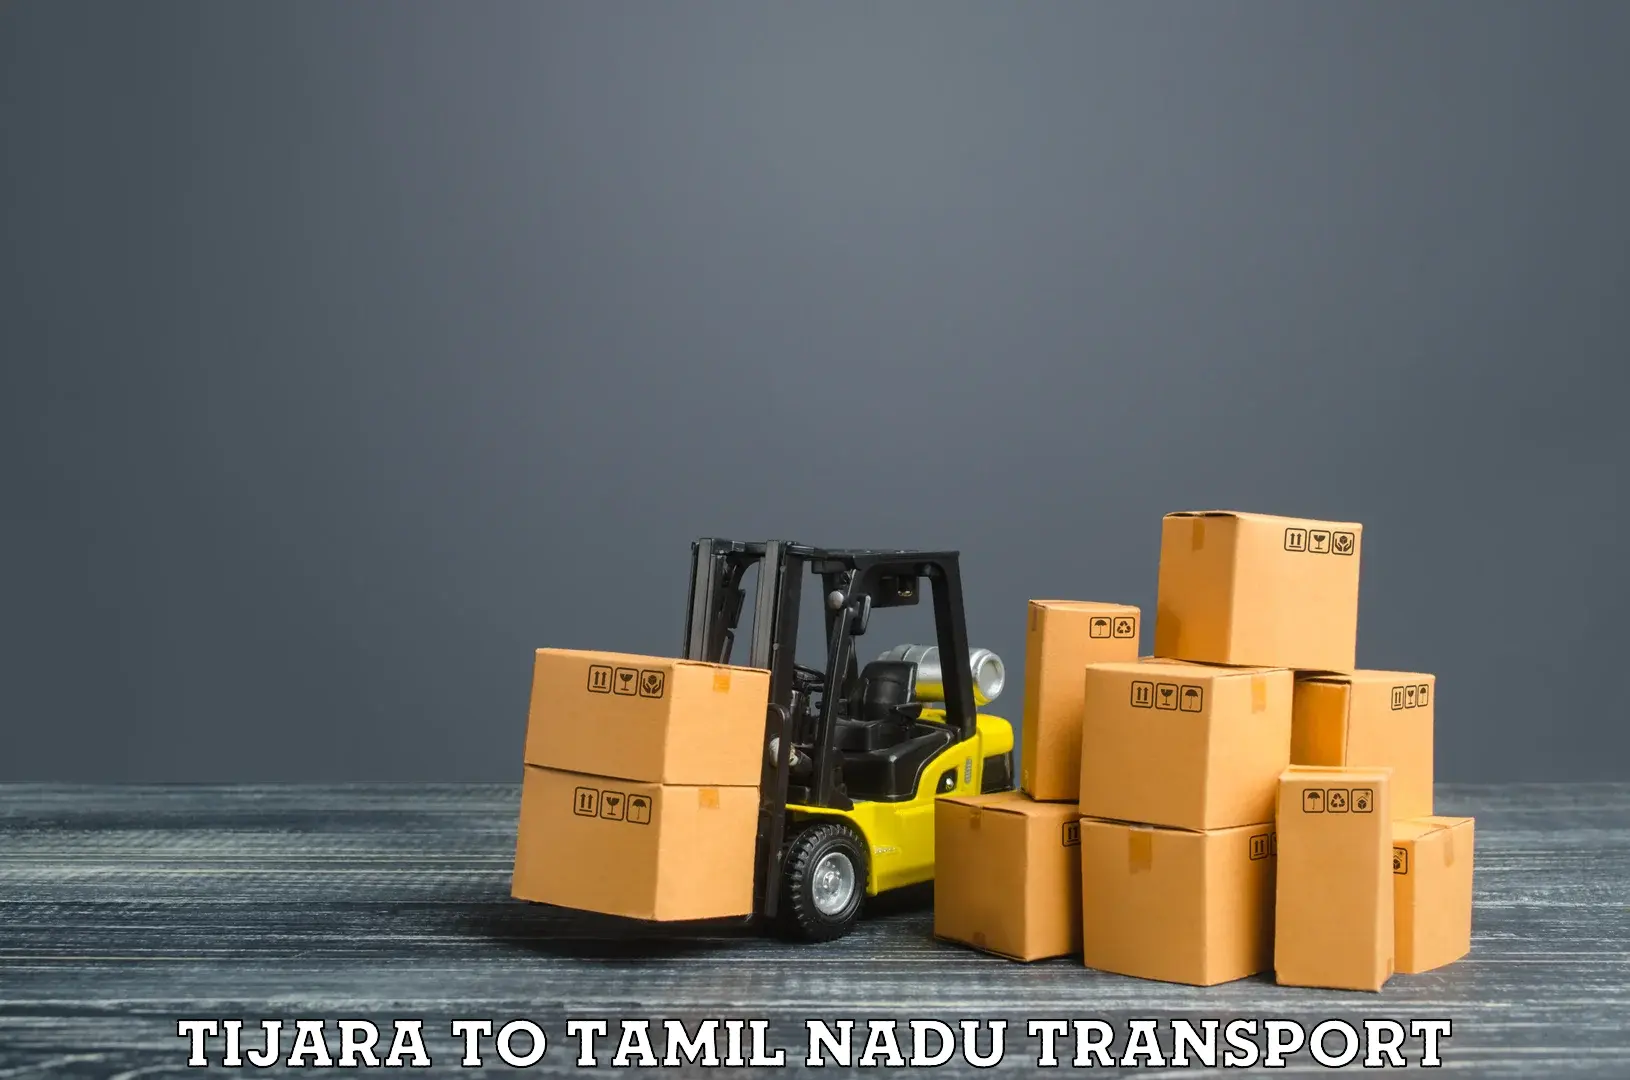 Furniture transport service Tijara to Salem